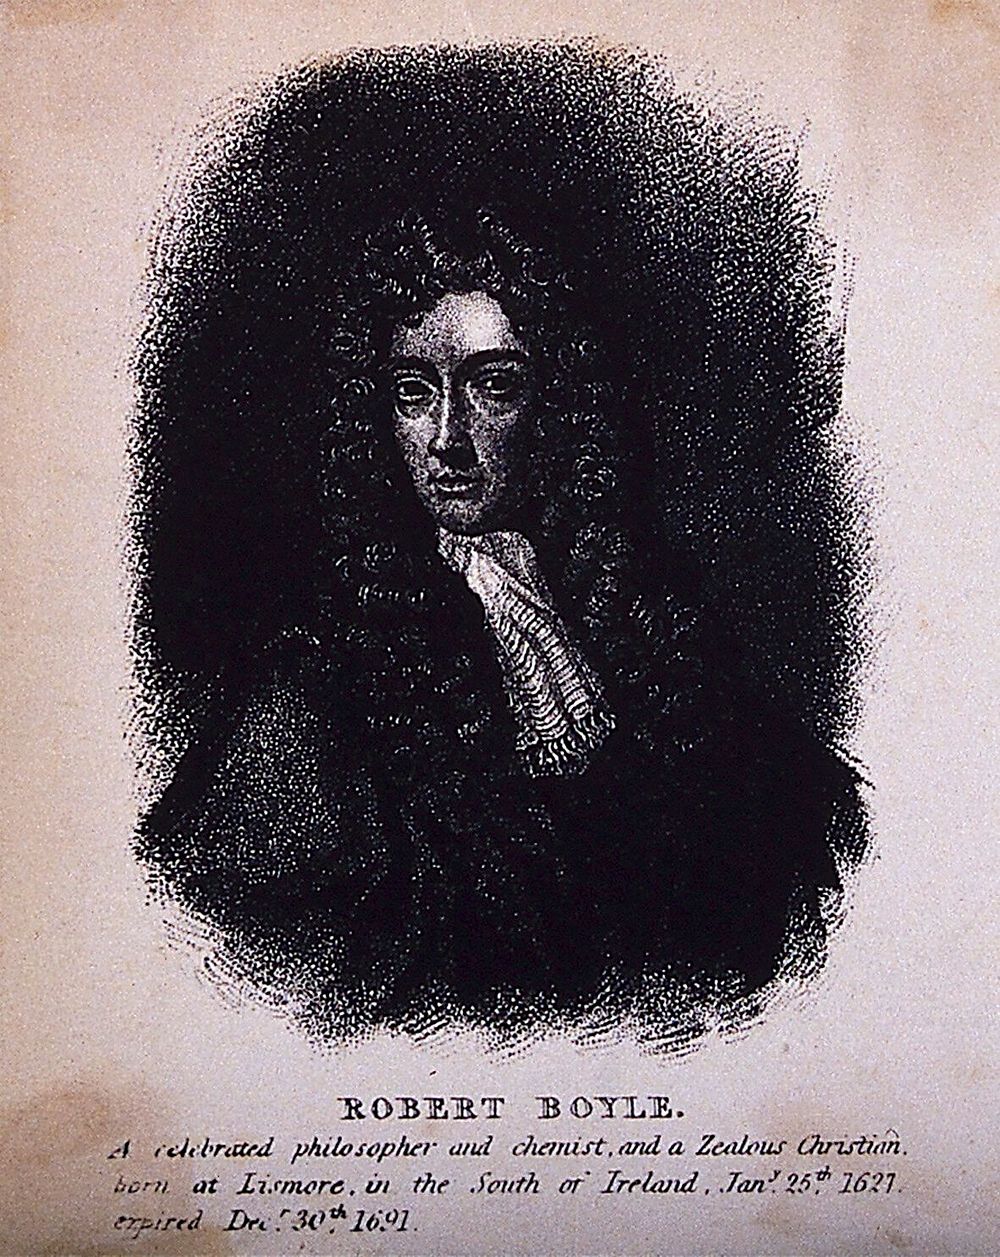 Portrait of The Honourable Robert Boyle (1627 - 1691), Irish natural philosopher